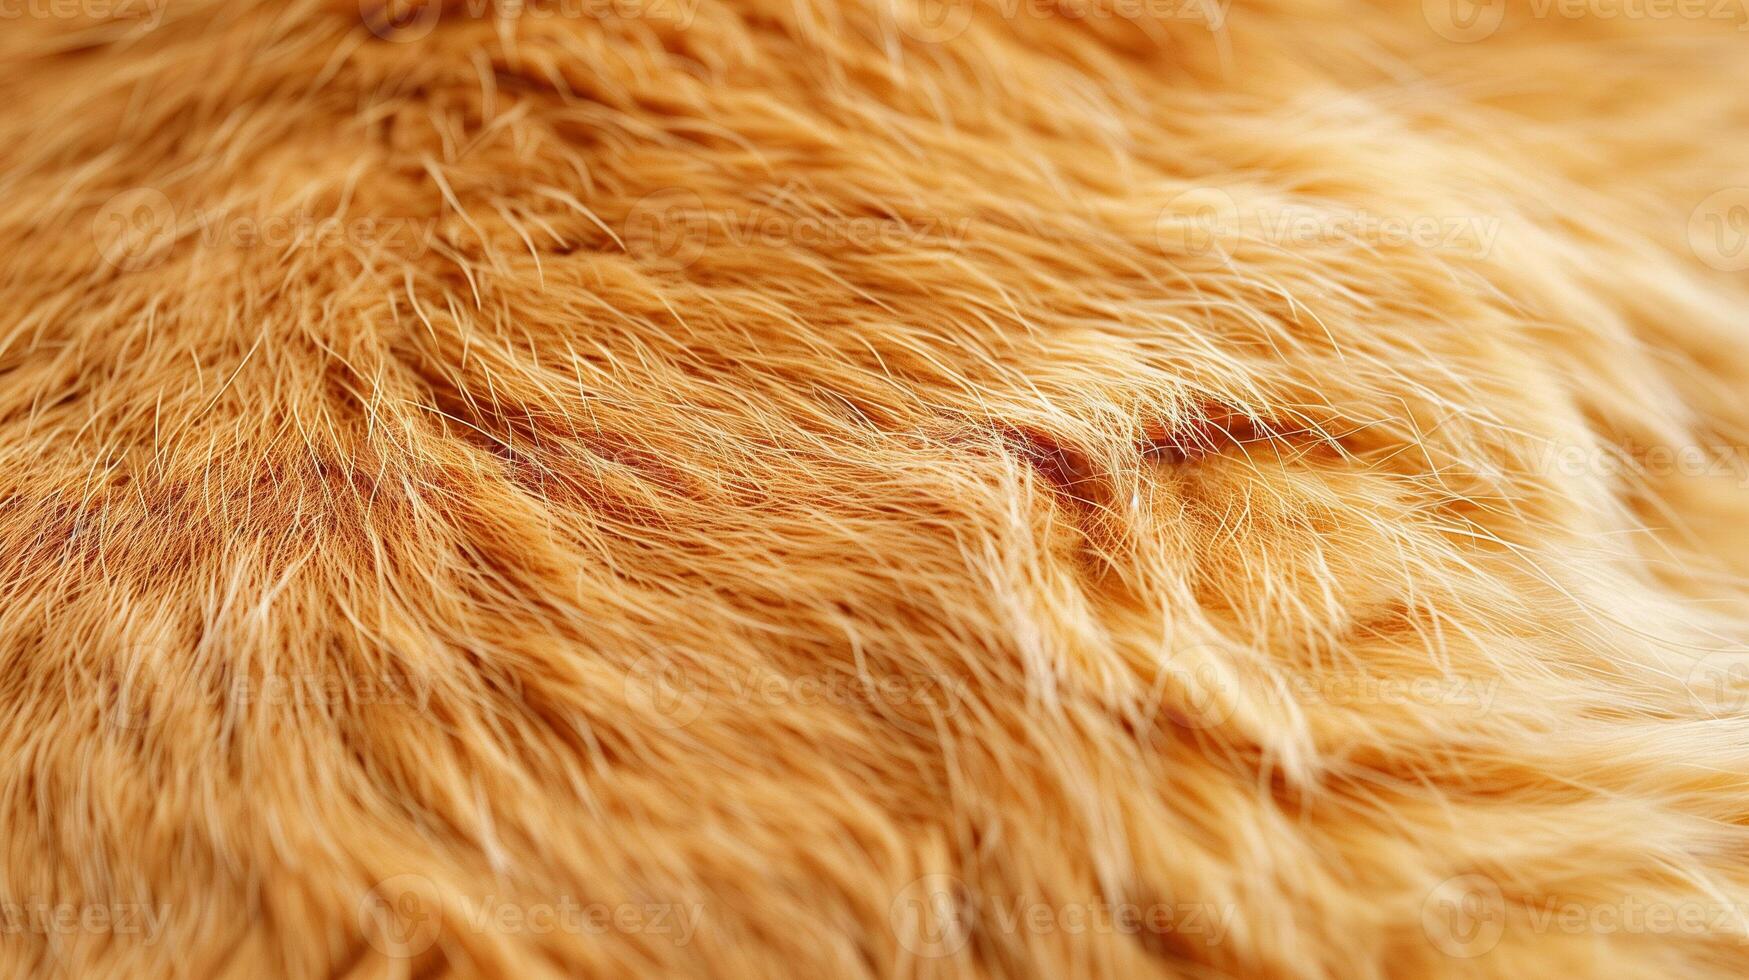 AI generated a light orange fawn color fur photo